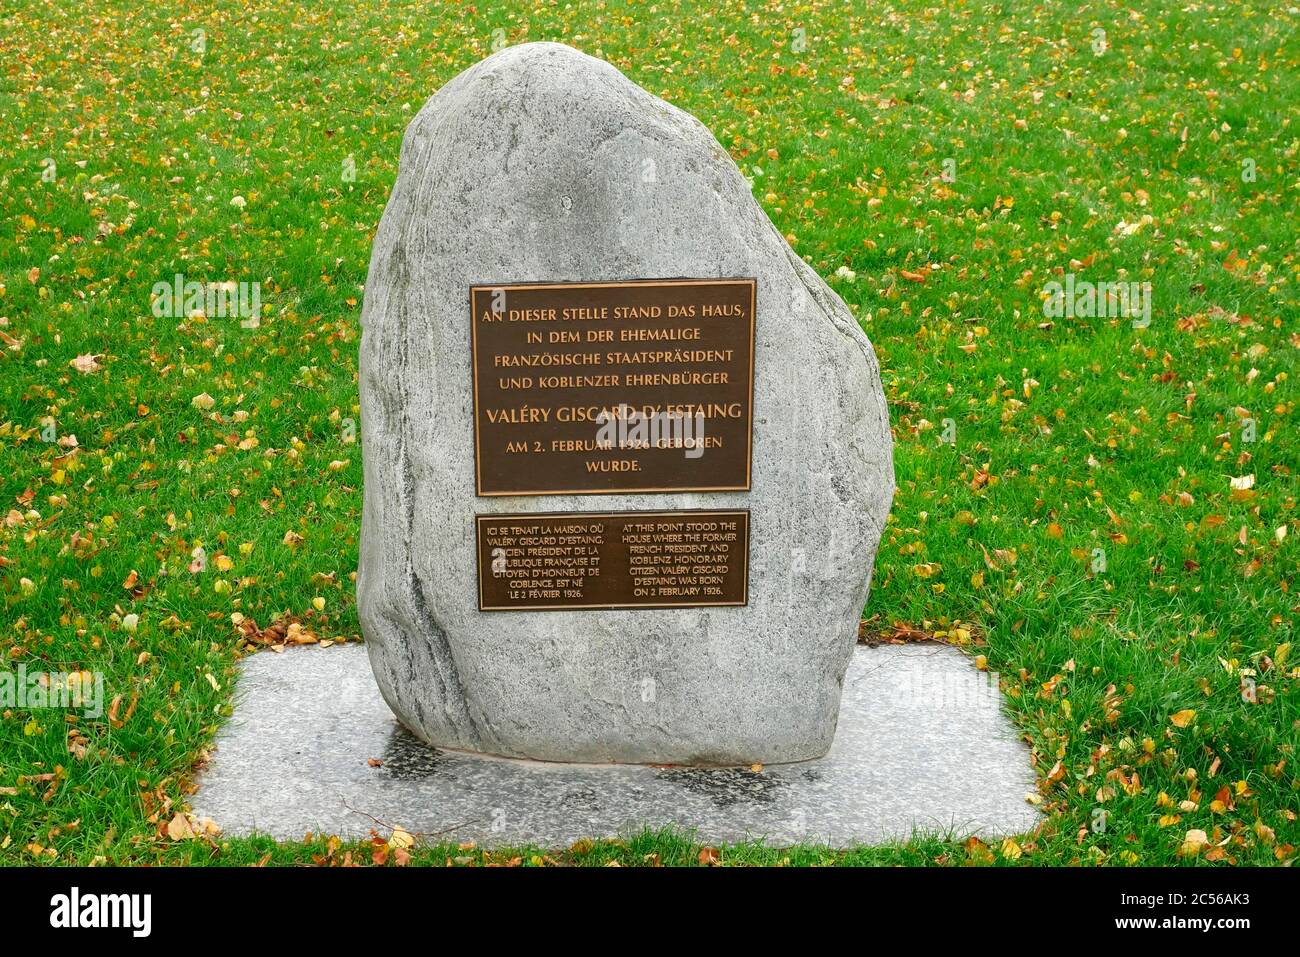 Memorial stone for Valery Giscard d'Estaing in the Rheinanlagen, Koblenz, Rhineland-Palatinate, Germany Stock Photo